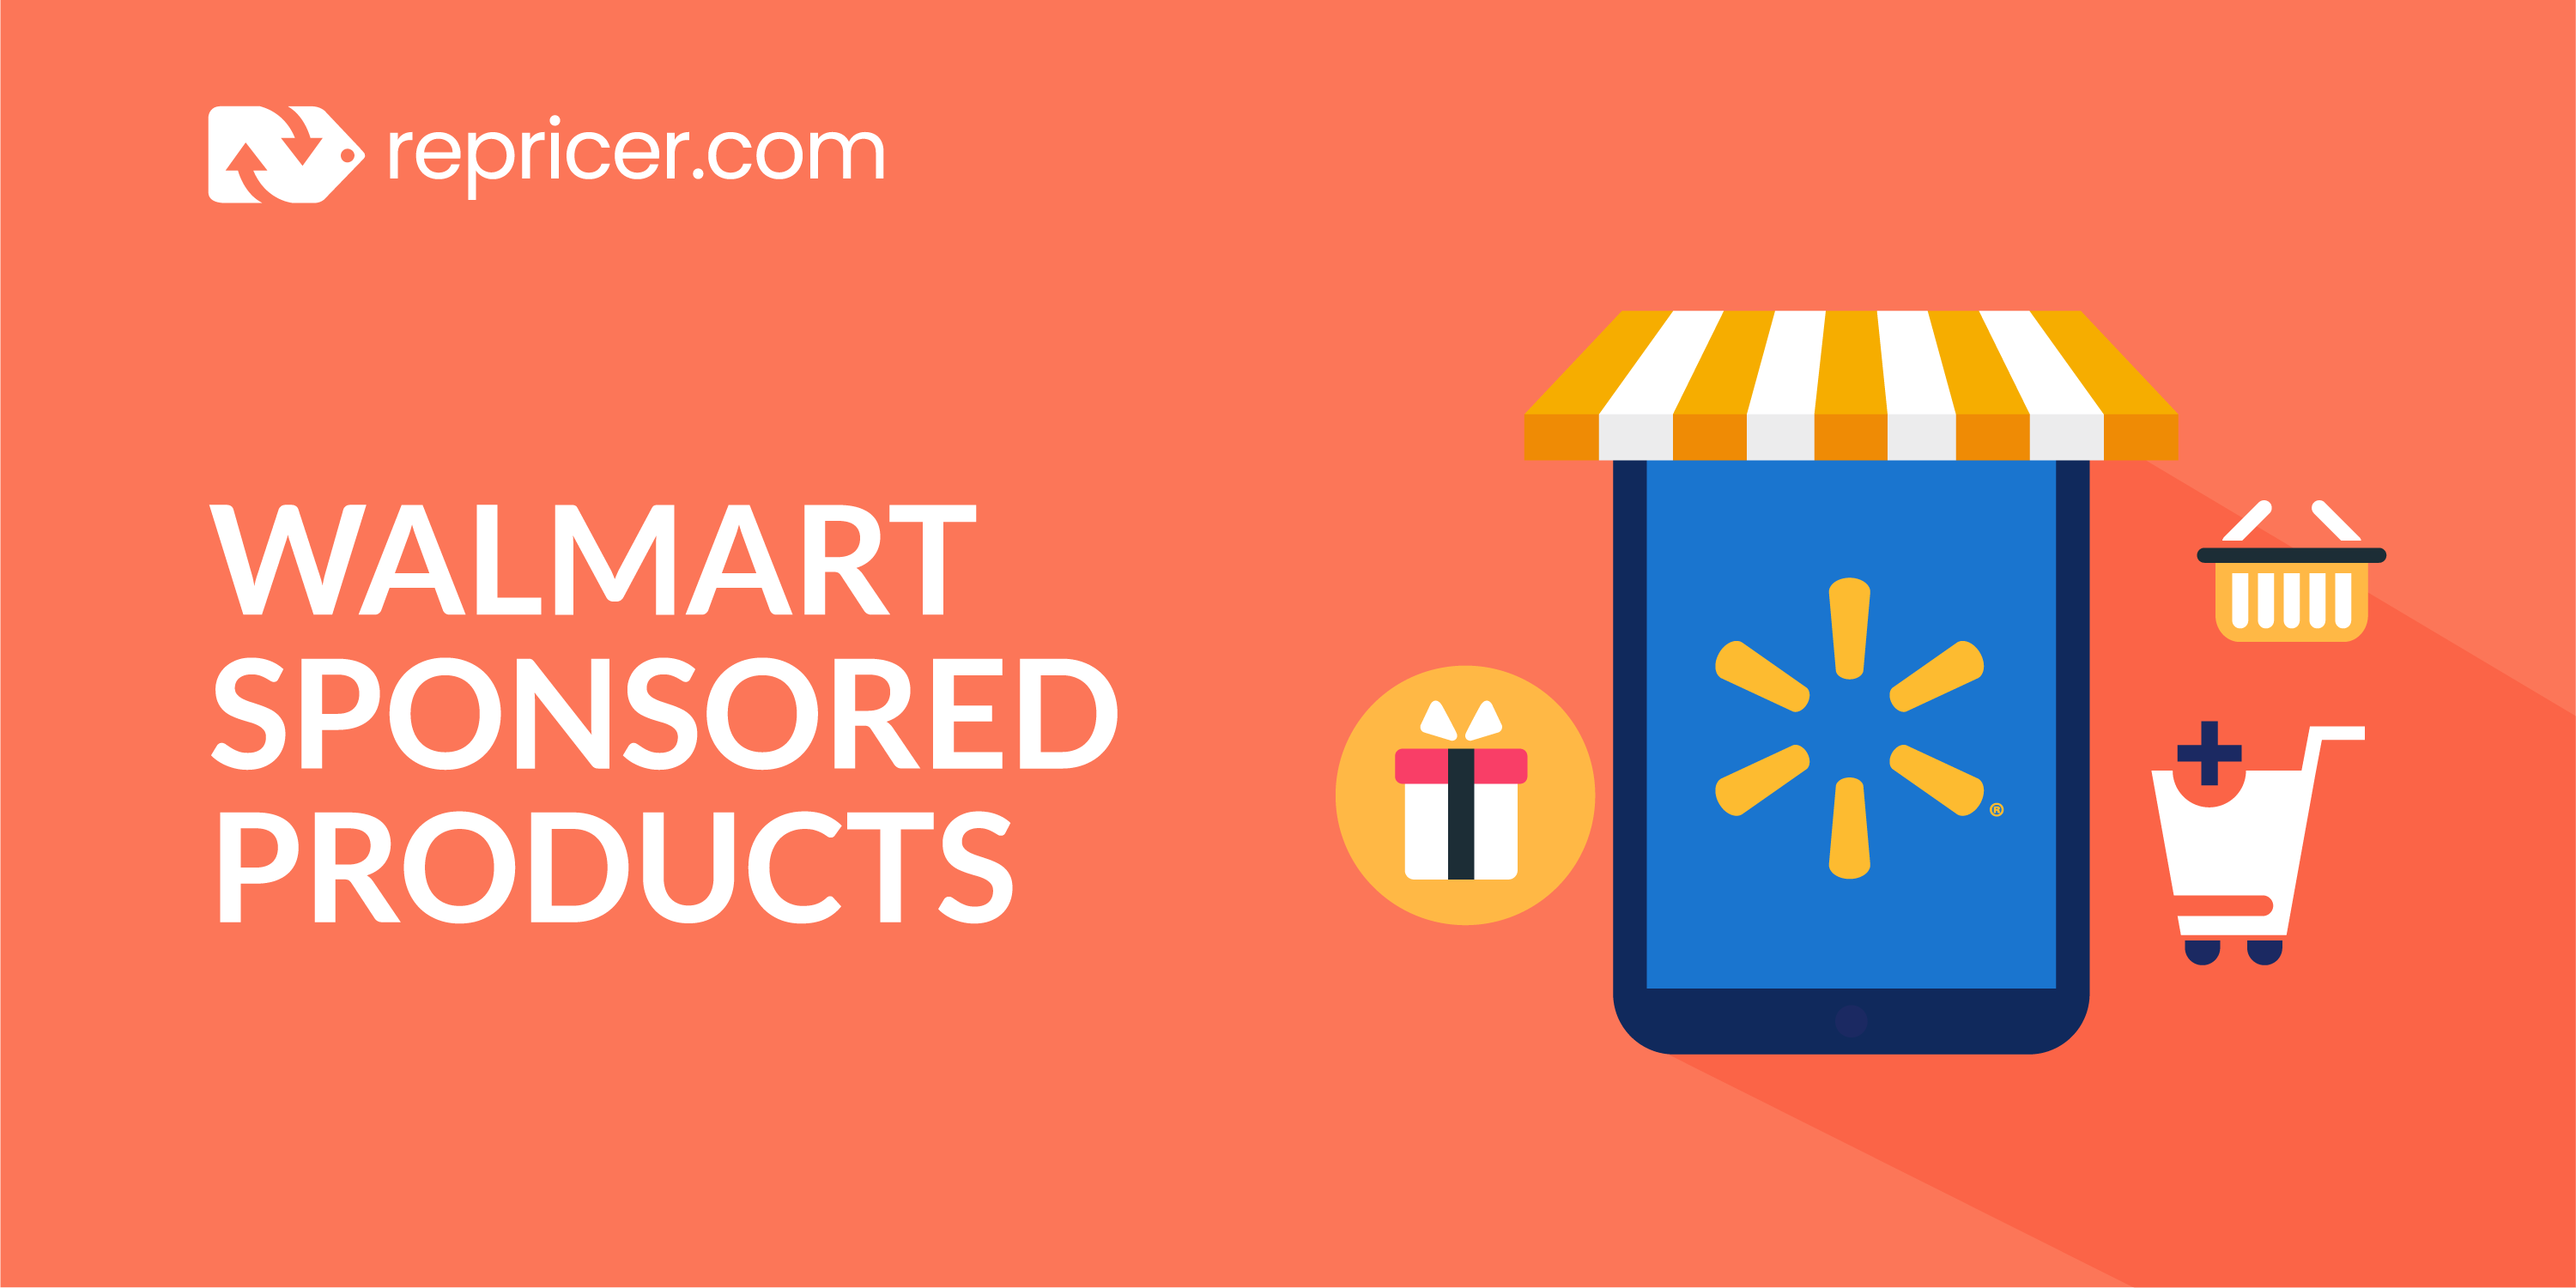 Maximizing Sales Through Inventory Management at Walmart